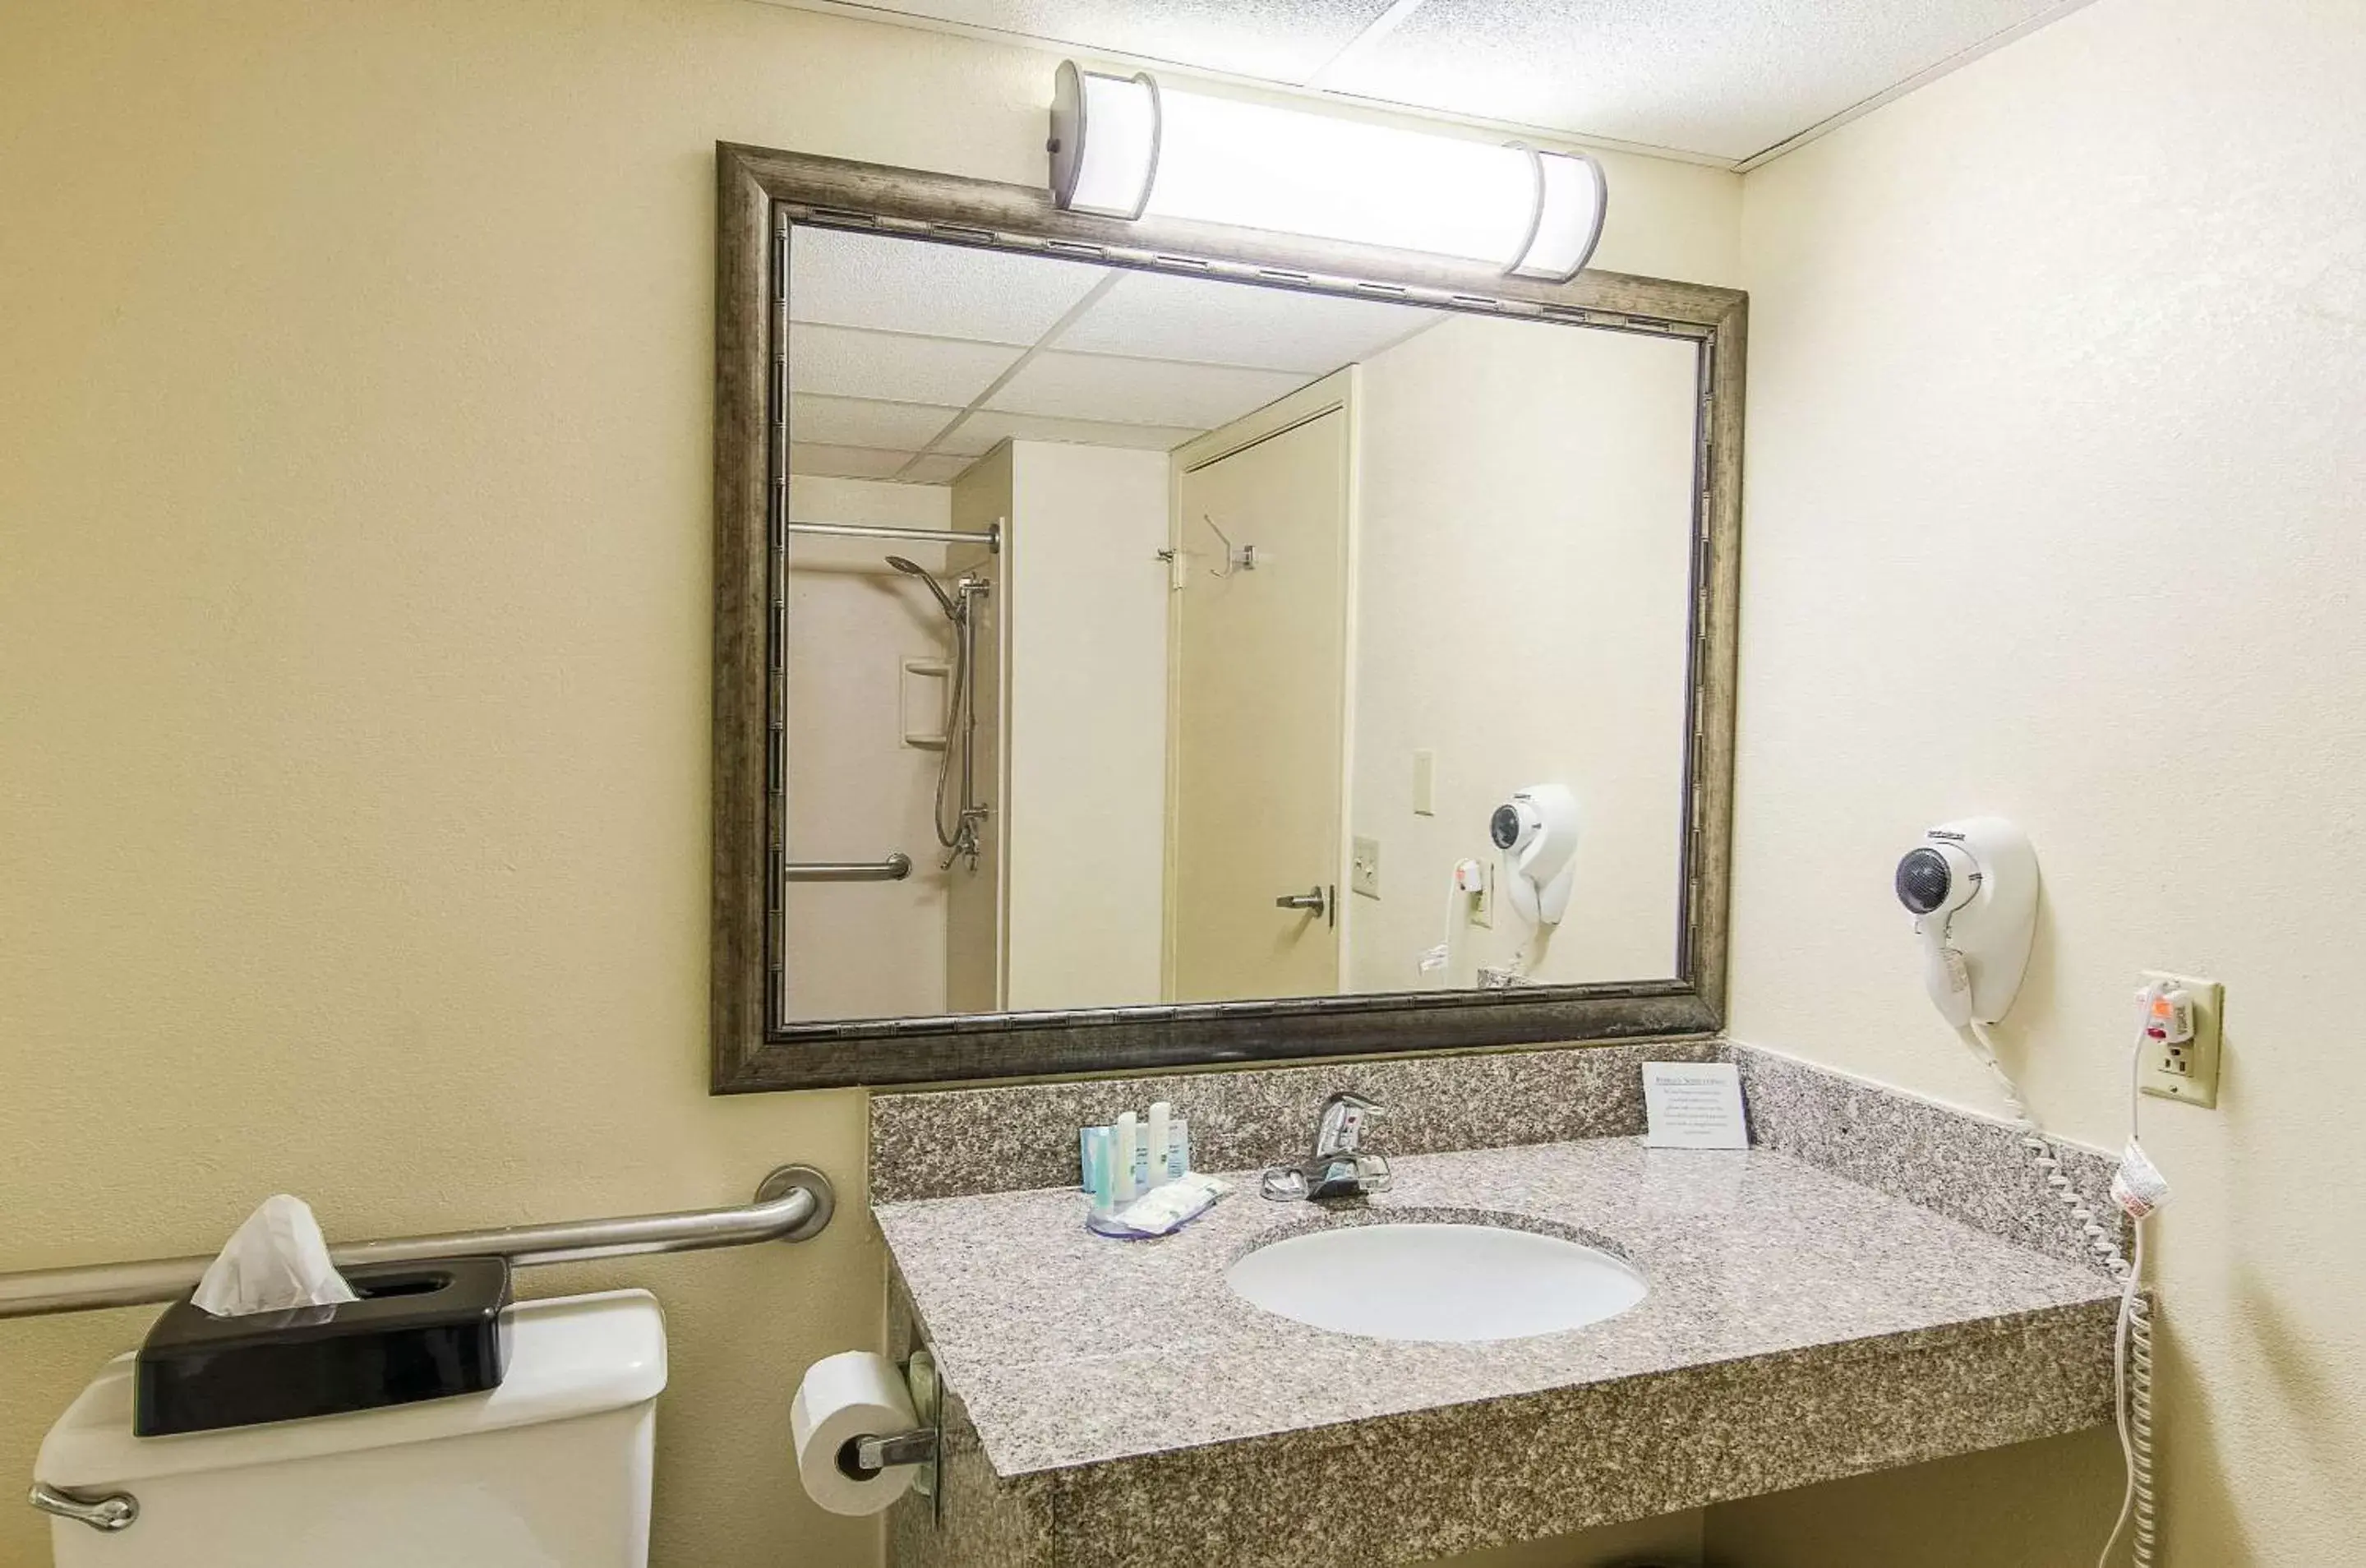 Photo of the whole room, Bathroom in Quality Inn & Suites Lexington near I-64 and I-81